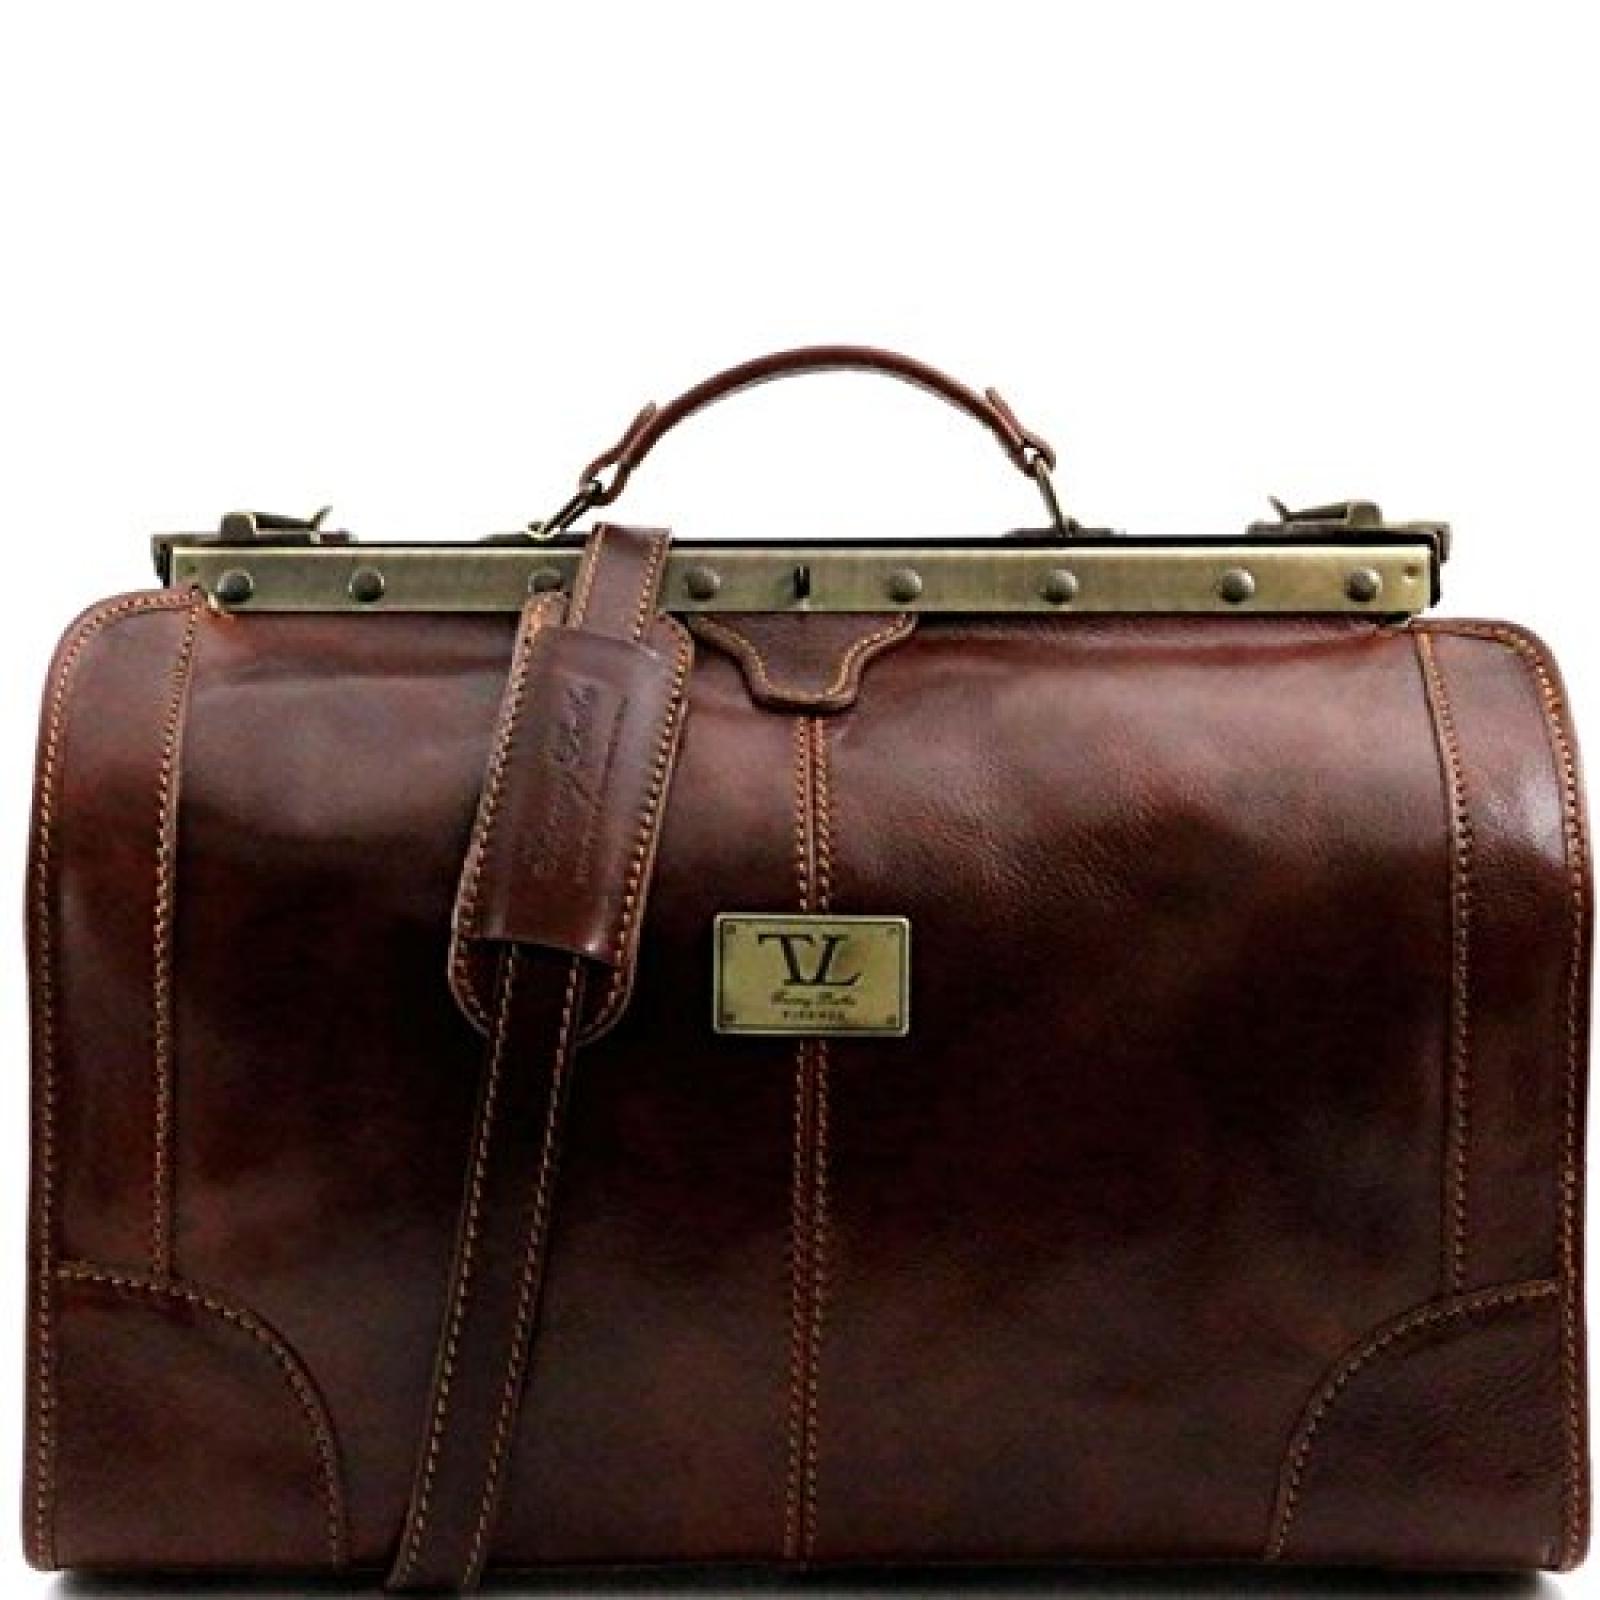 Tuscany Leather - Madrid - Maulbügelreisetasche aus Leder - Klein Braun - TL1023/1 